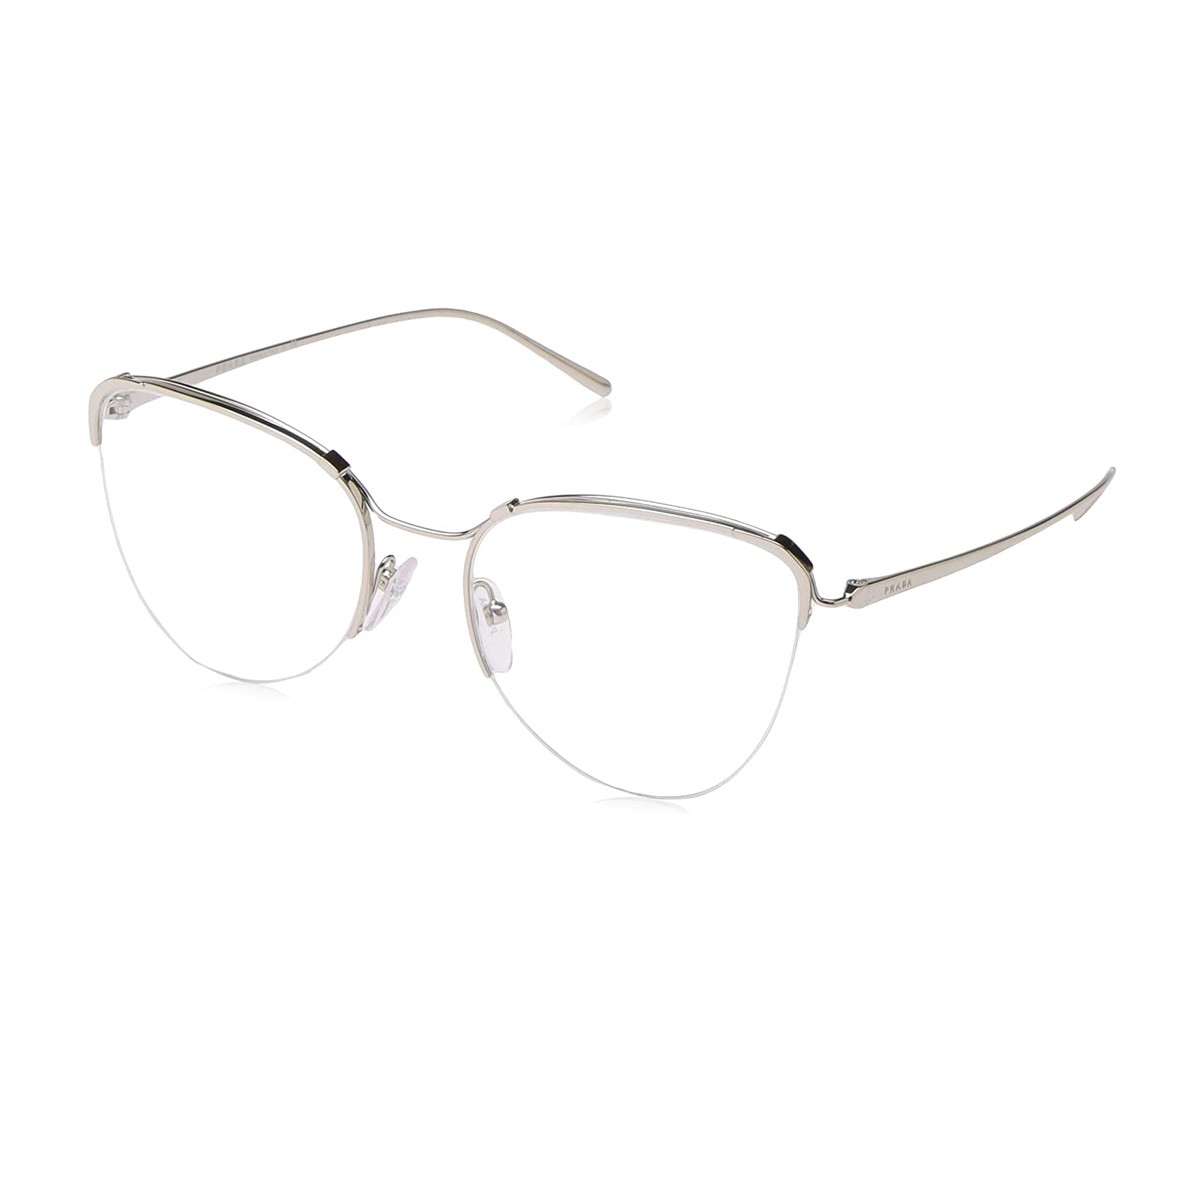 Prada PR60UV | Women's eyeglasses